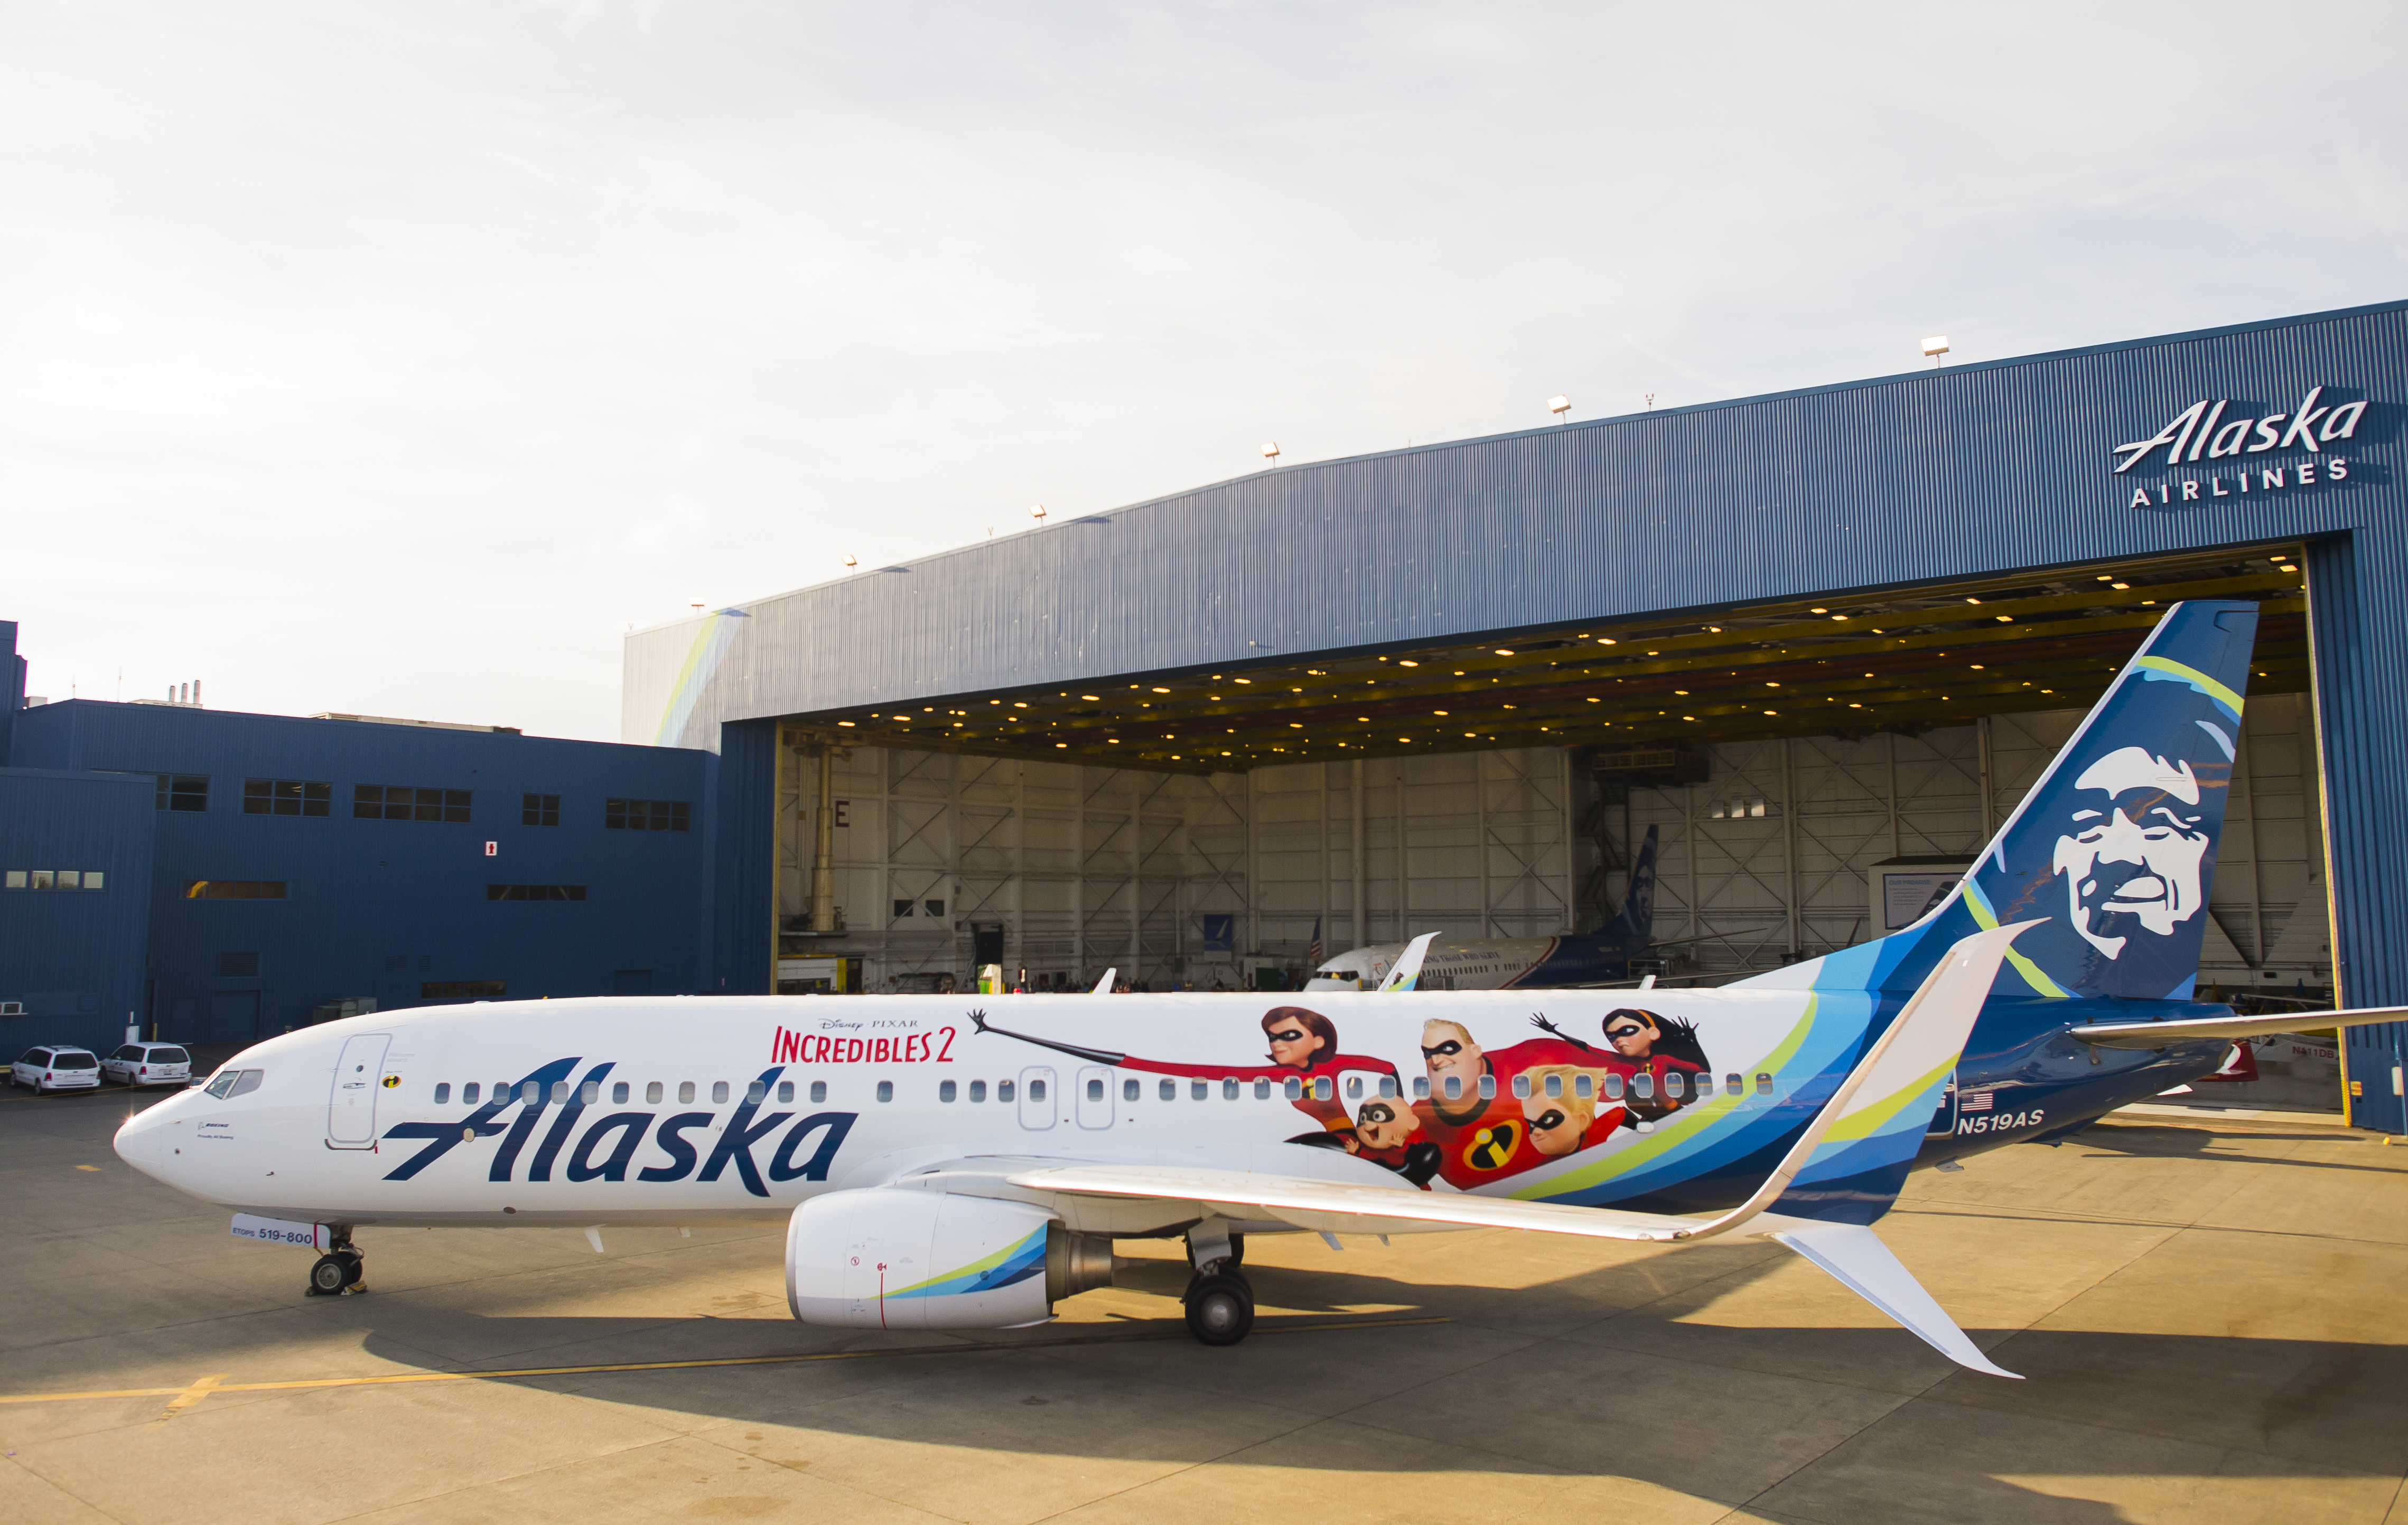 Alaska Airlines Incredibles 2 Plane